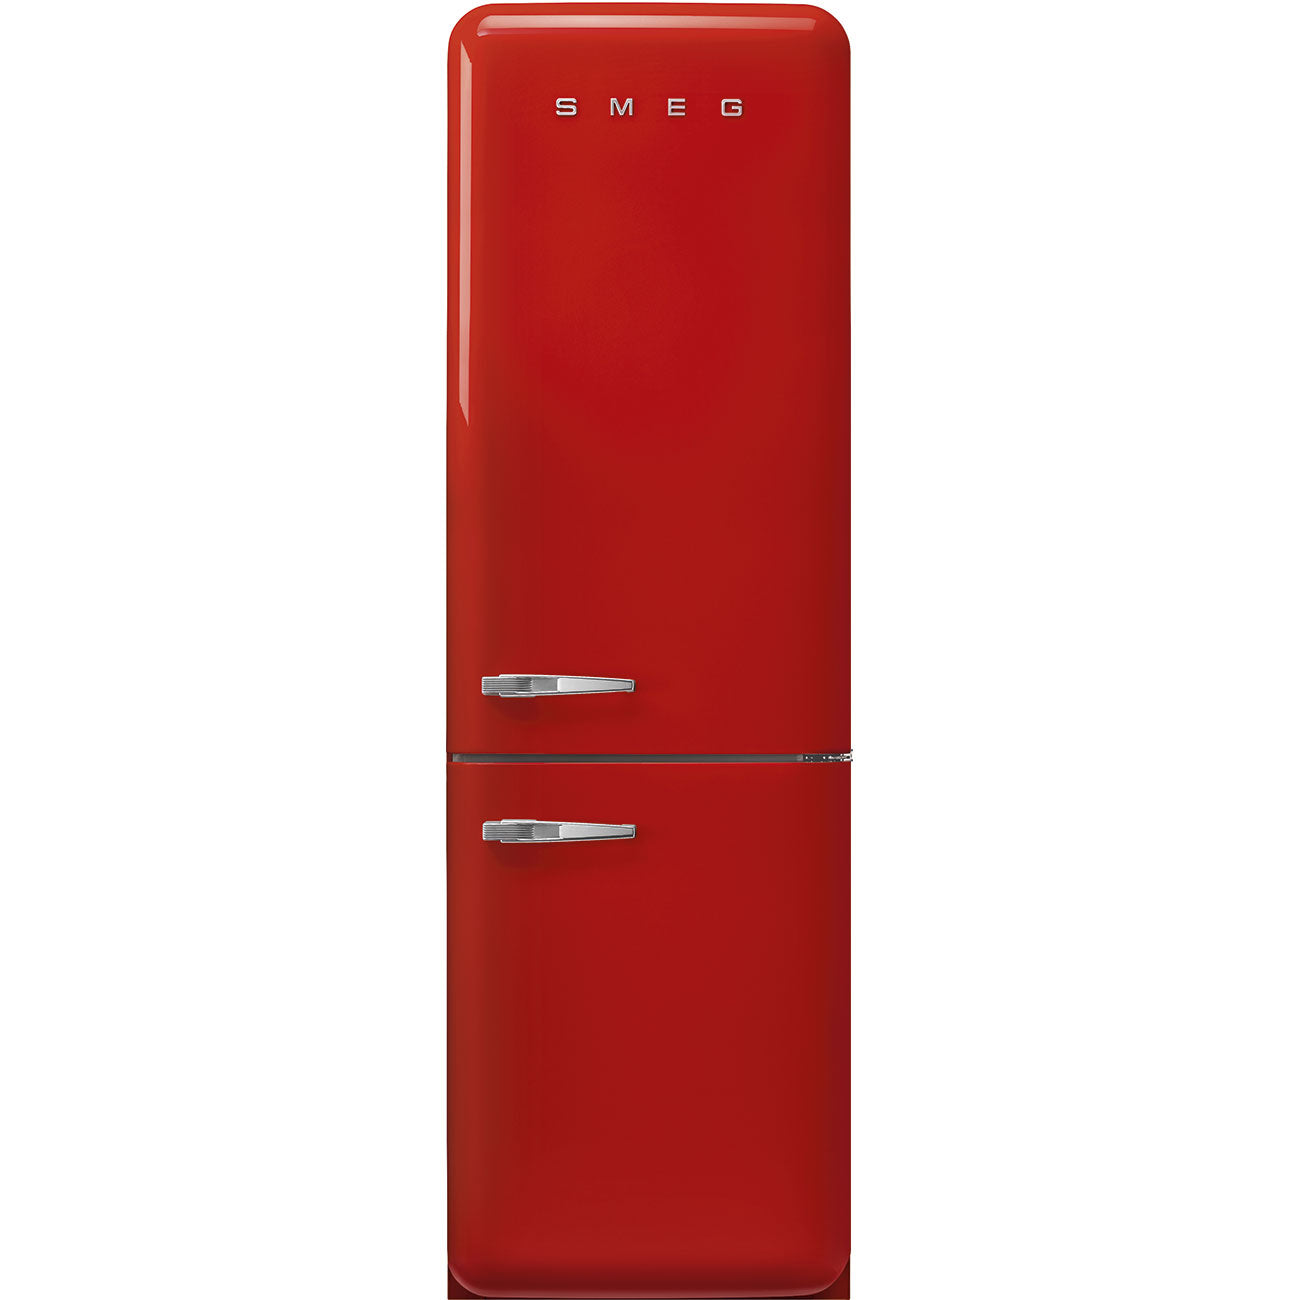 Smeg 331L 50S Style Fridge/Freezer Red -Rh Hinge - FAB32RRD5AU